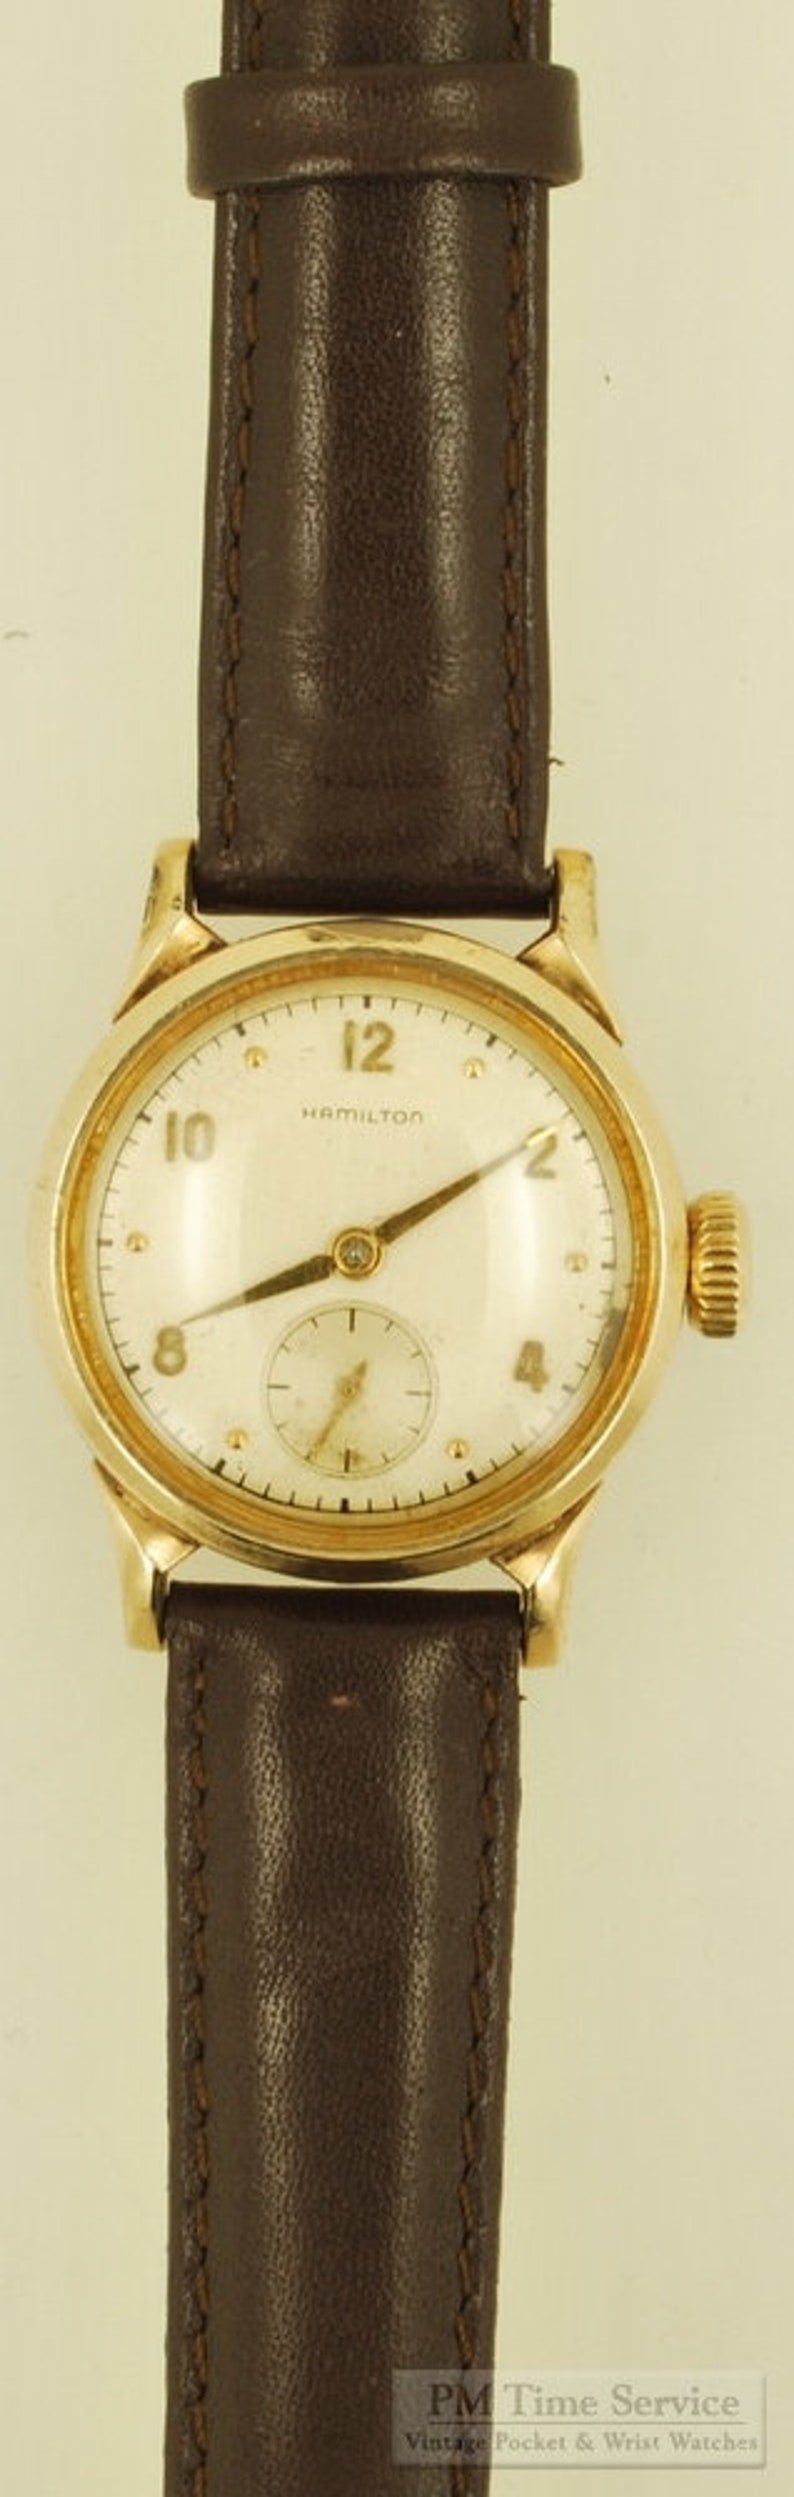 Hamilton vintage grade 747 wrist watch, 17 jewels, handsome yellow gold filled water-resistant Nordon model case 画像 4